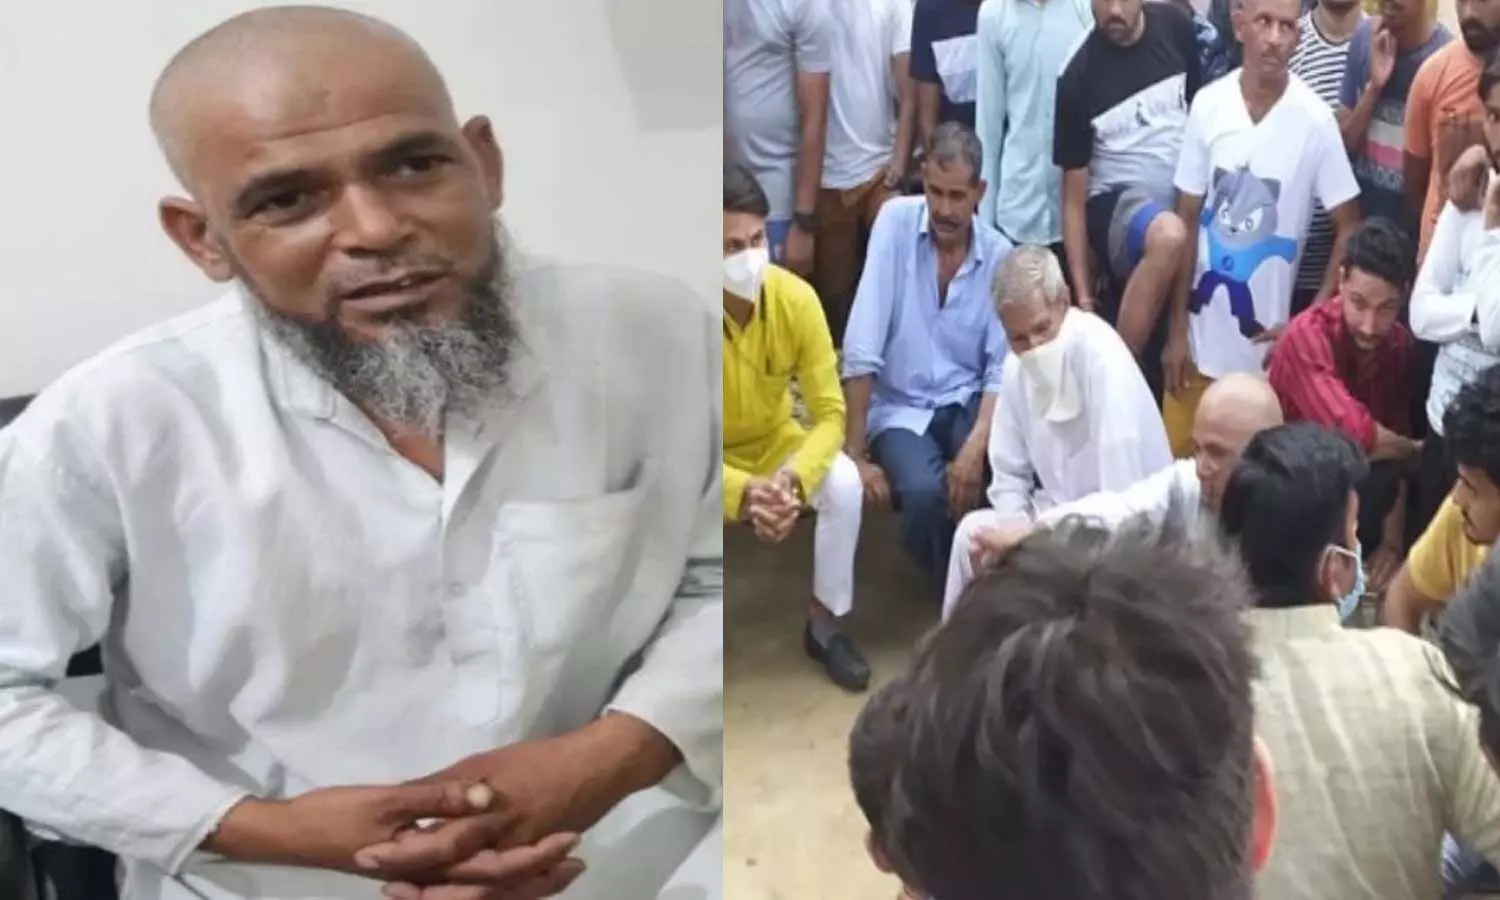 Tarachands conversion in jail